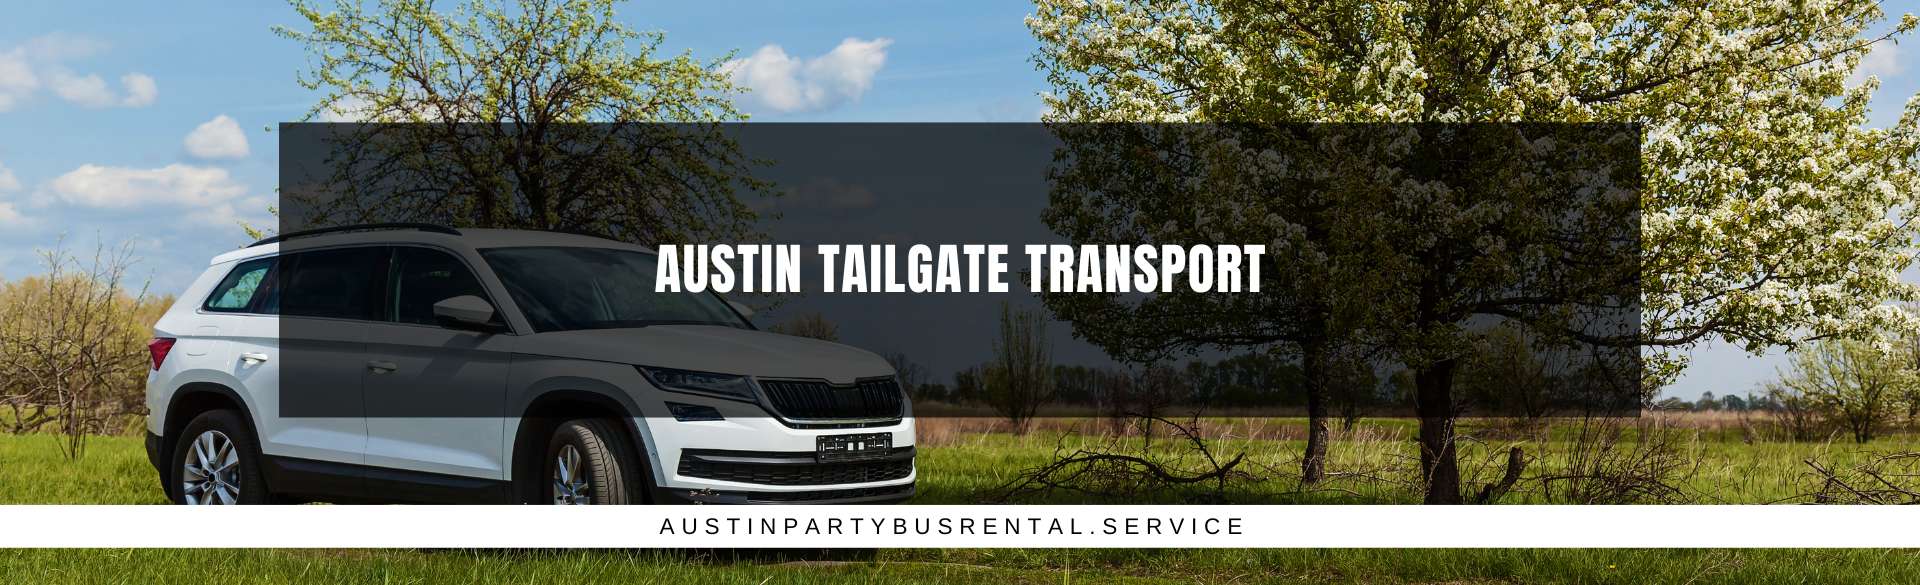 Austin Tailgate Transport